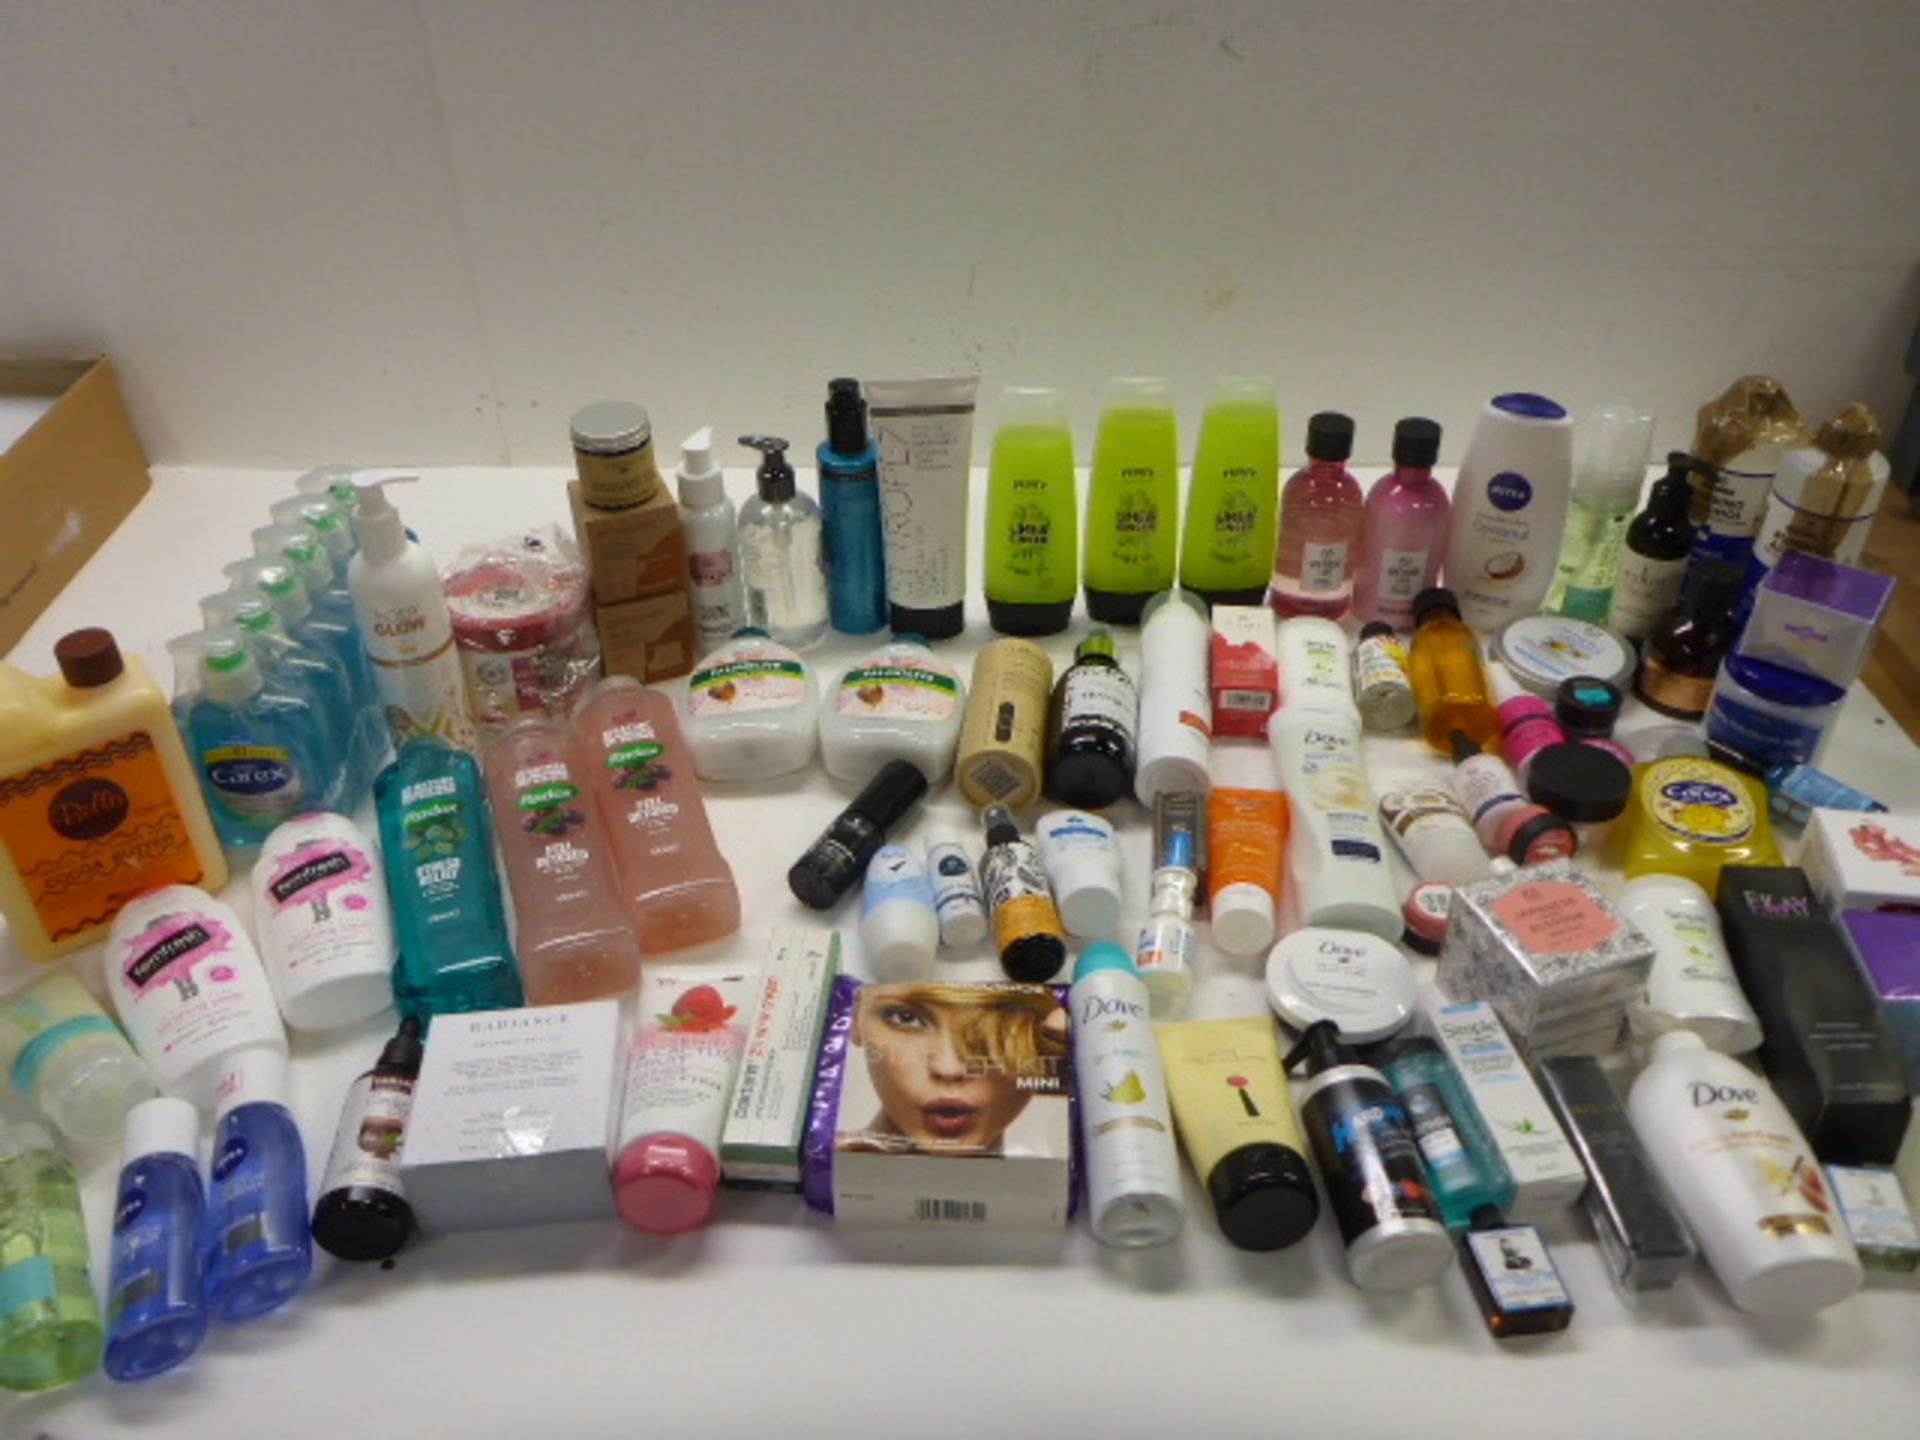 Large bag of toiletries including toothpaste, hand wash, shower gel, moisturizer, deodorant, self